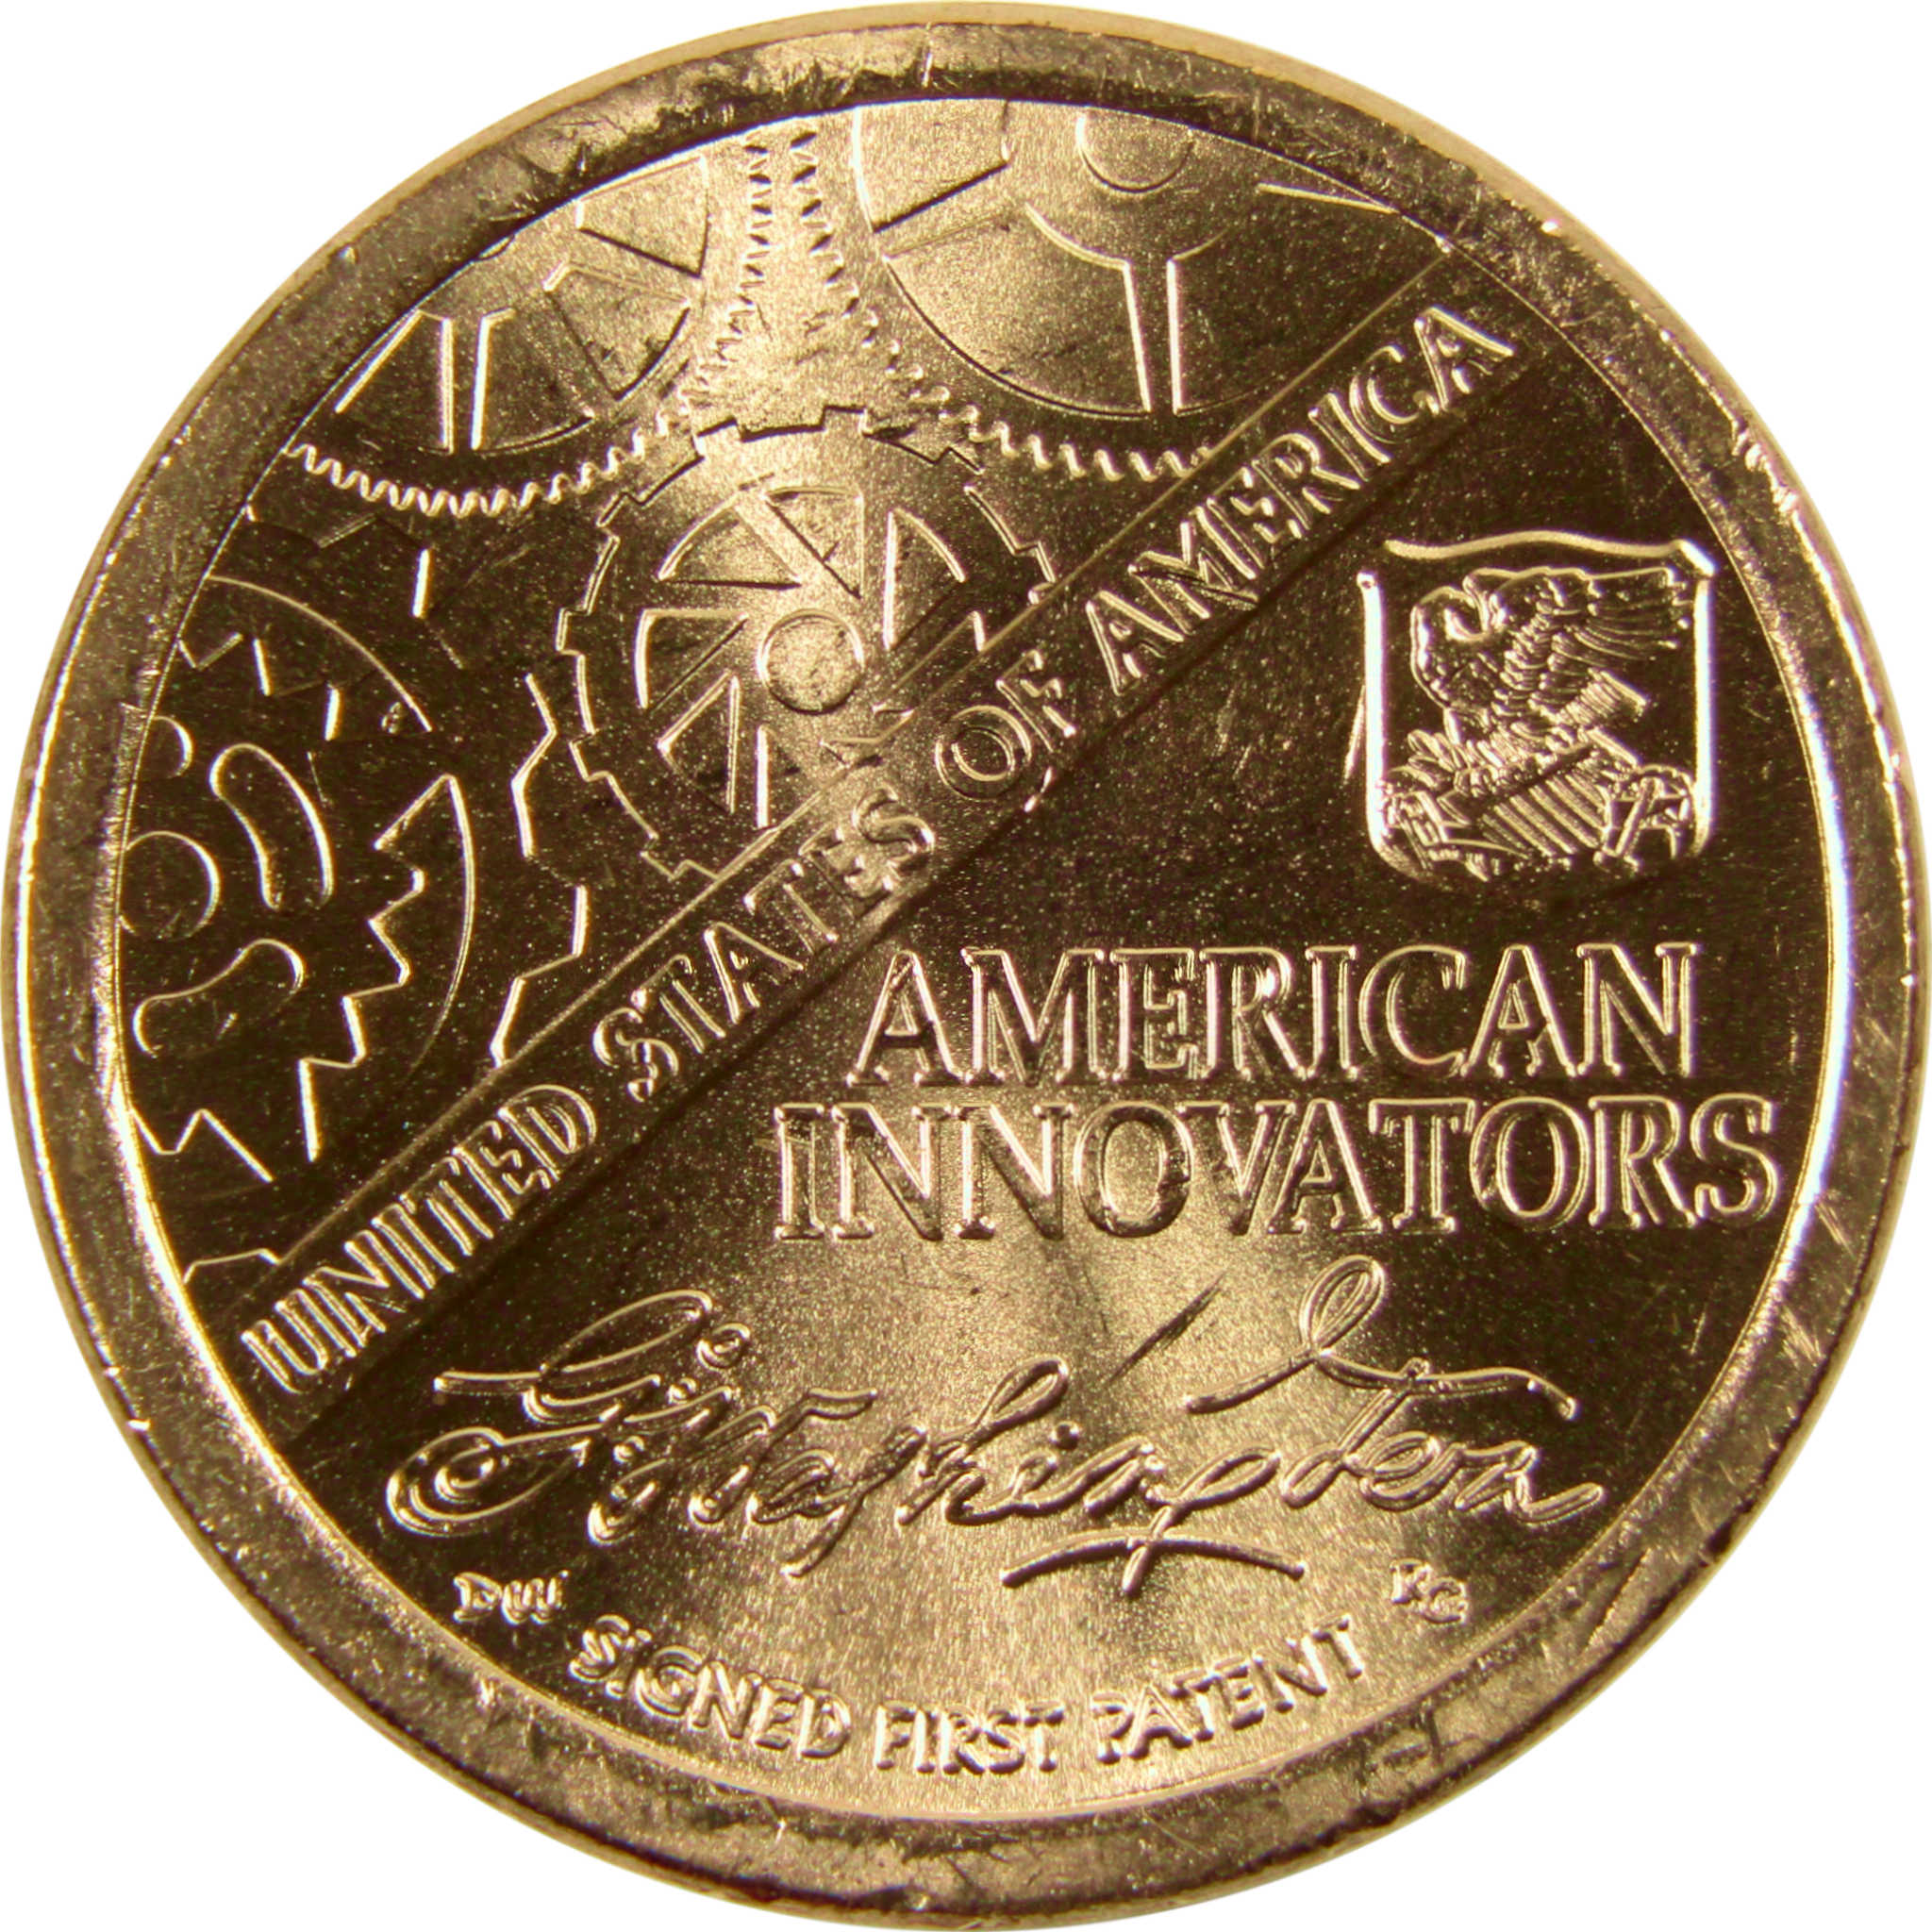 2018 P American Innovation Dollar BU Uncirculated $1 Coin